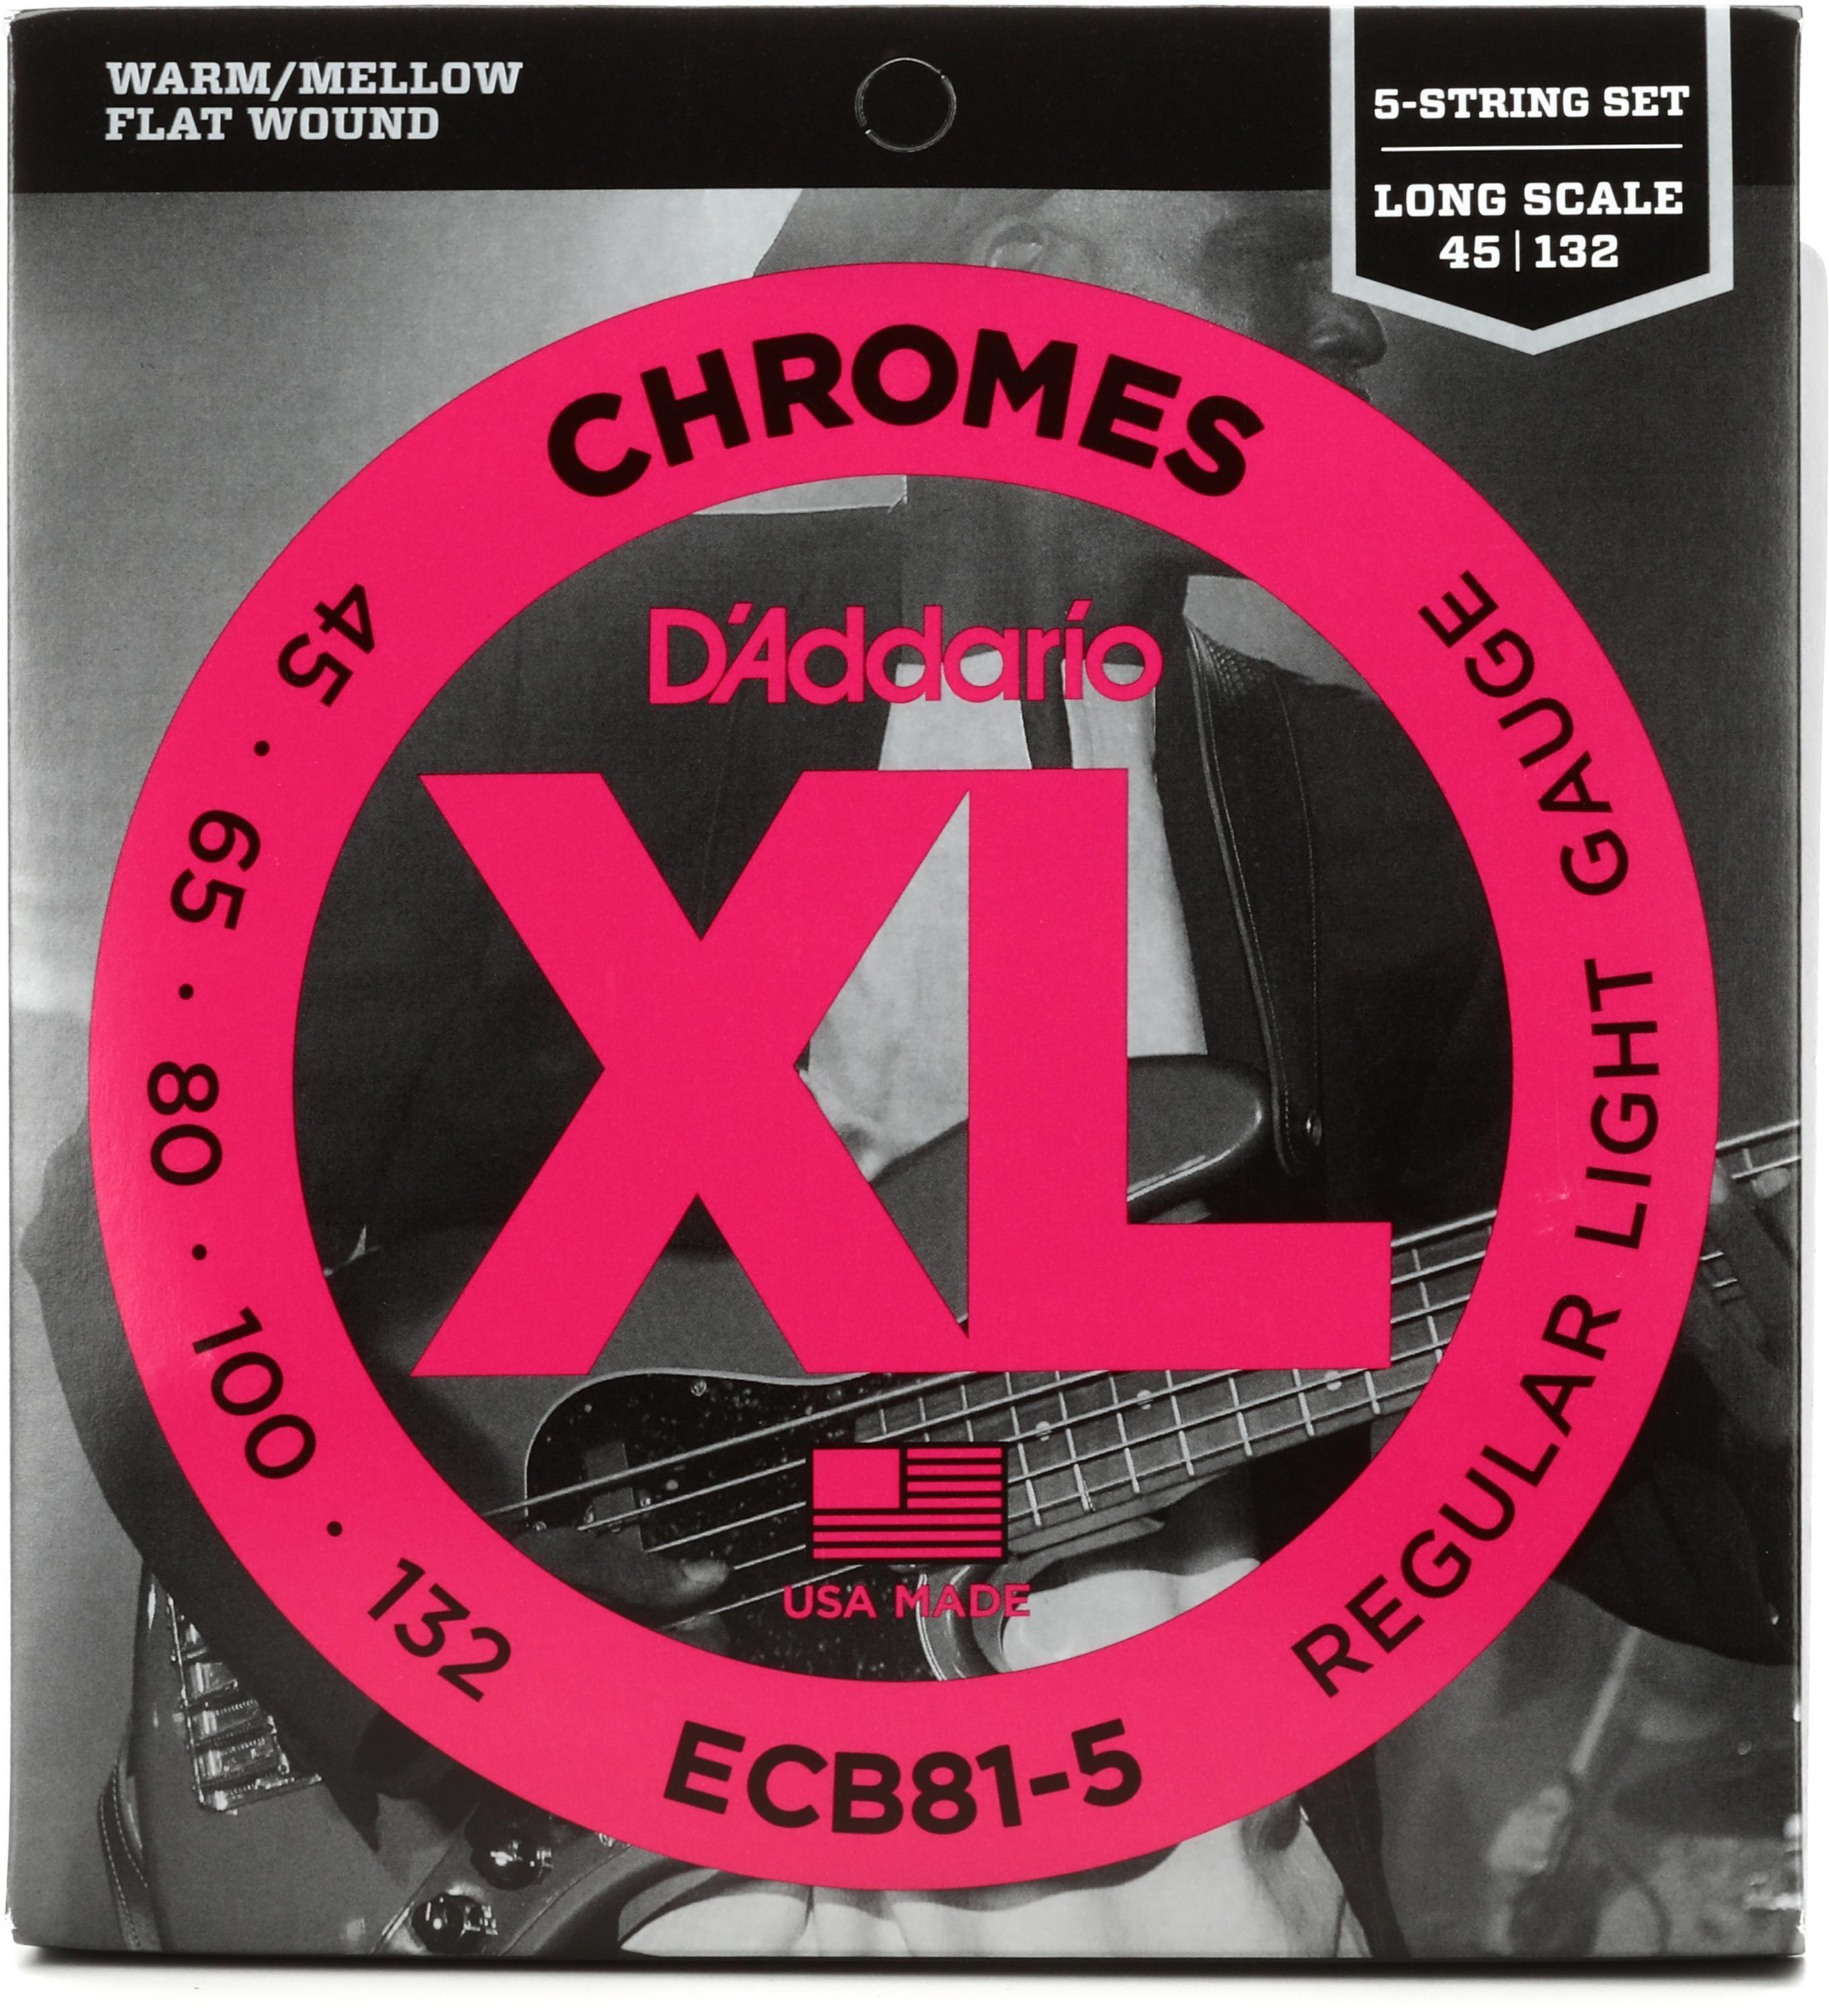 D'Addario ECB81-5 Chromes Flatwound Bass Guitar Strings - .045-.132 Regular  Light Long Scale 5-string